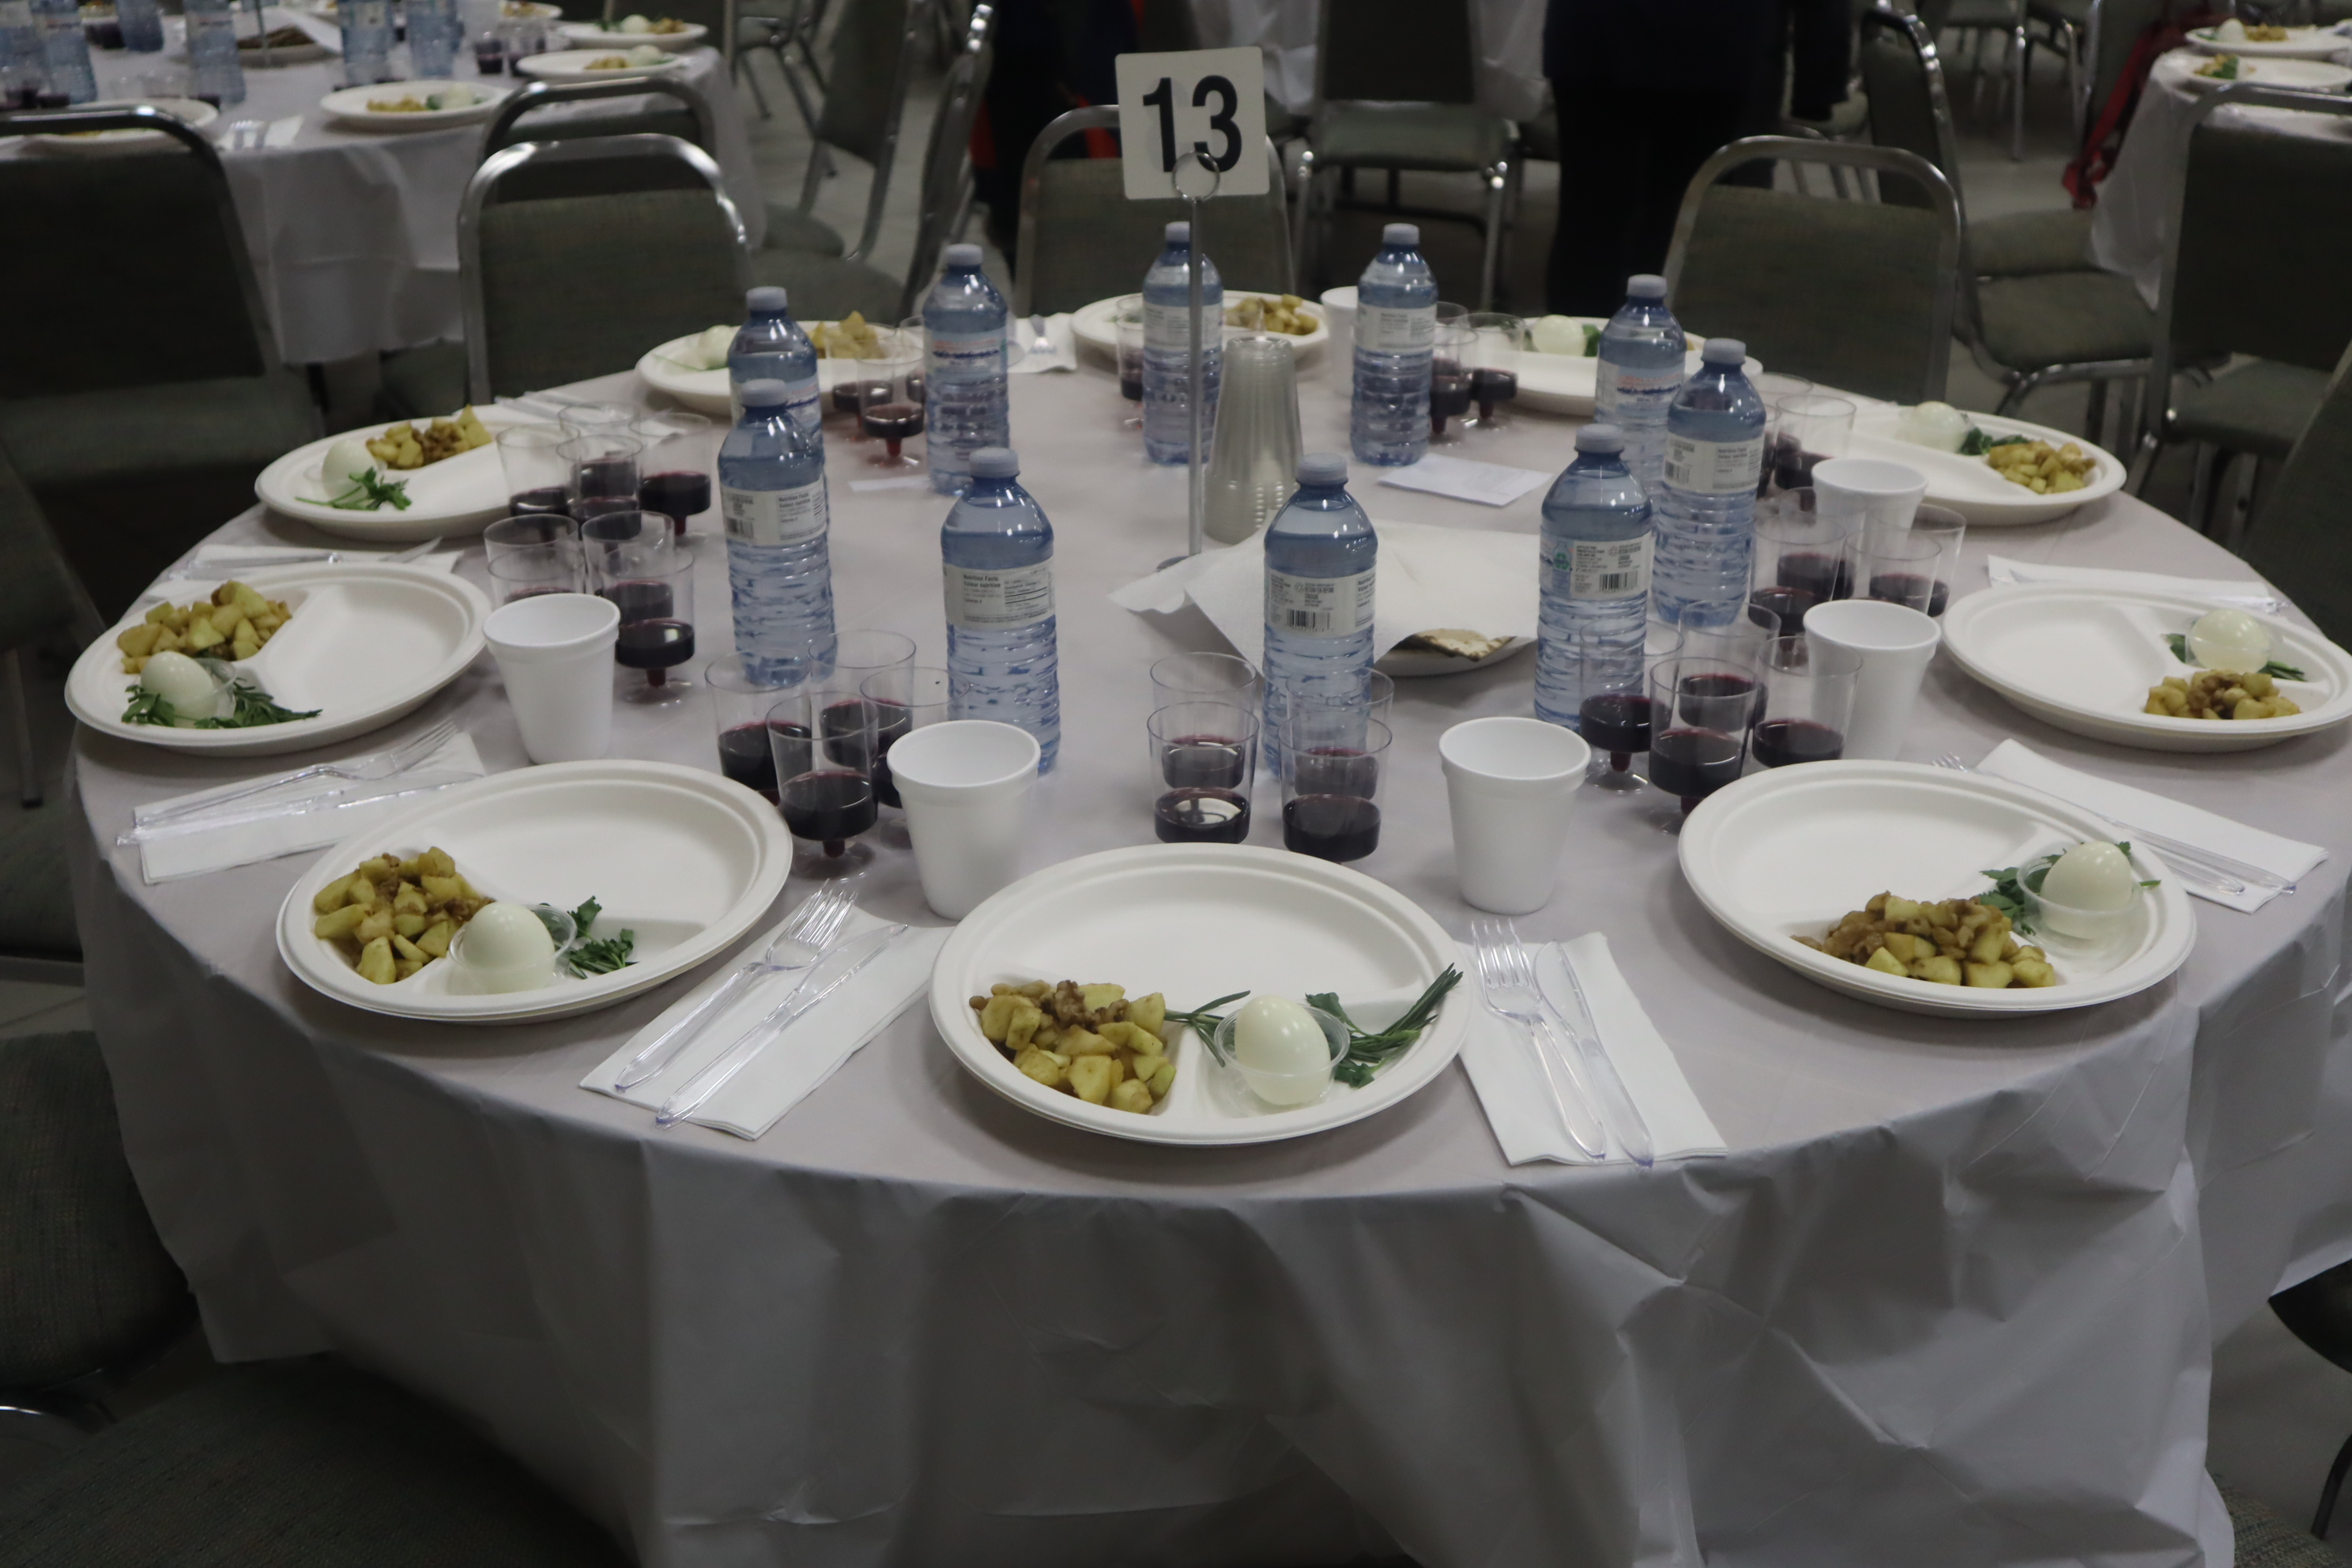 Seder Meal Table Set-Up Prep